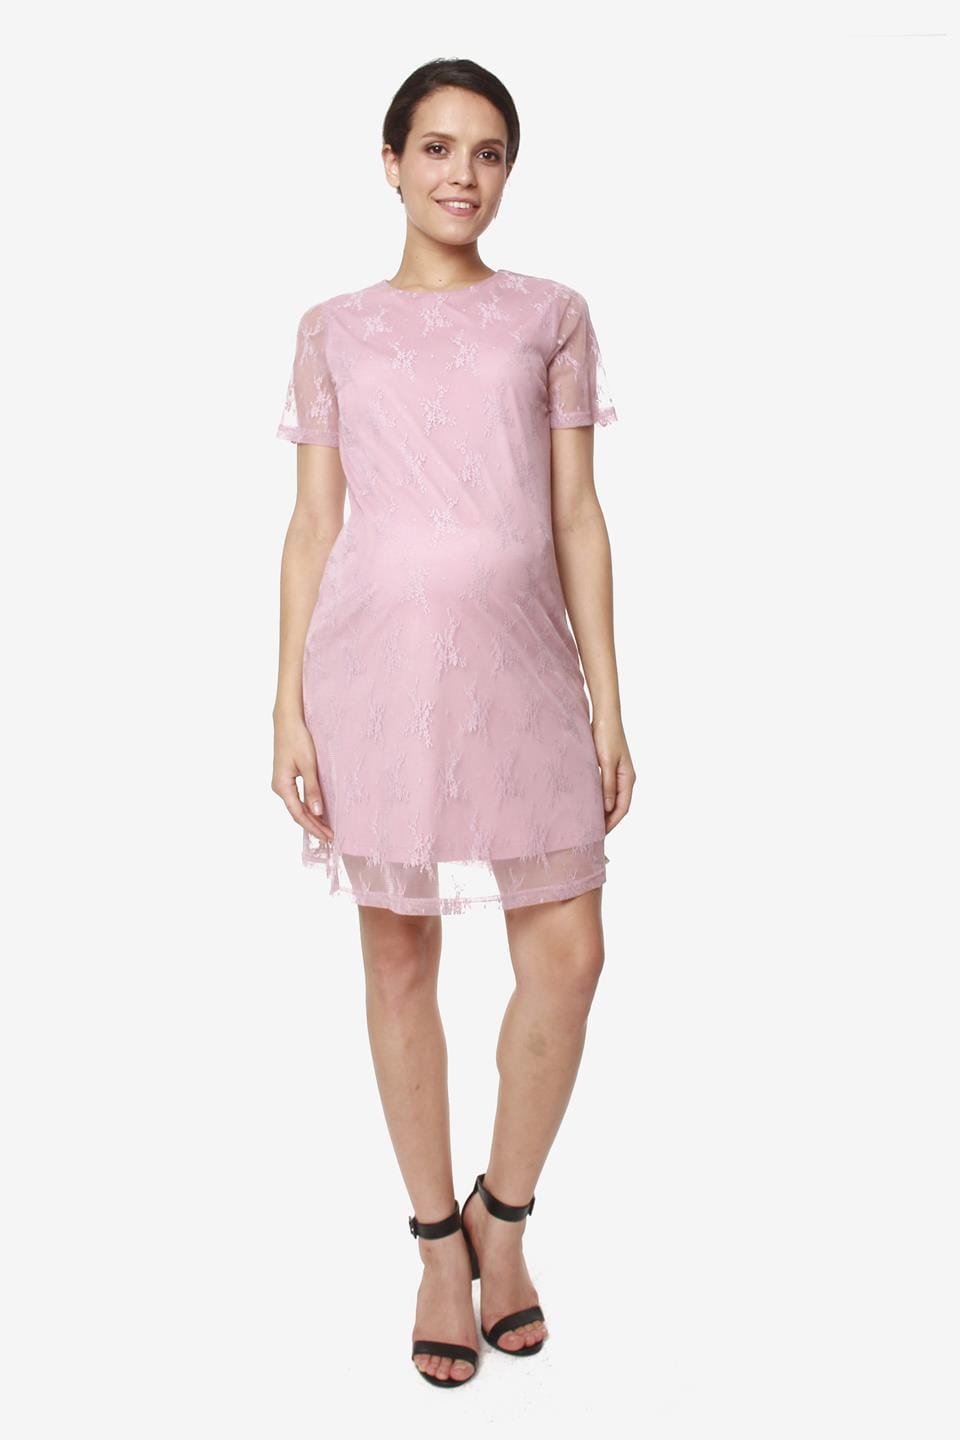 Catriona Full Lace Short Sleeve Nursing Dress Dusty Pink